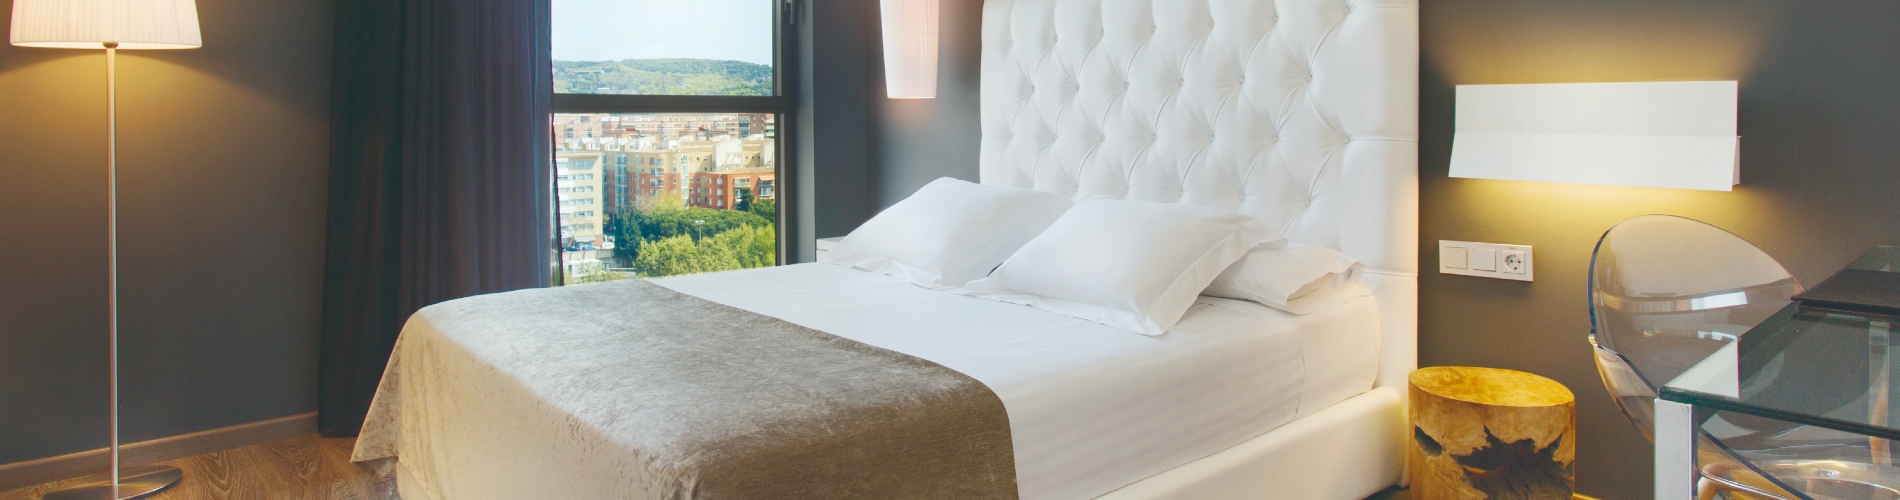 Double Room Hotel Barcelona